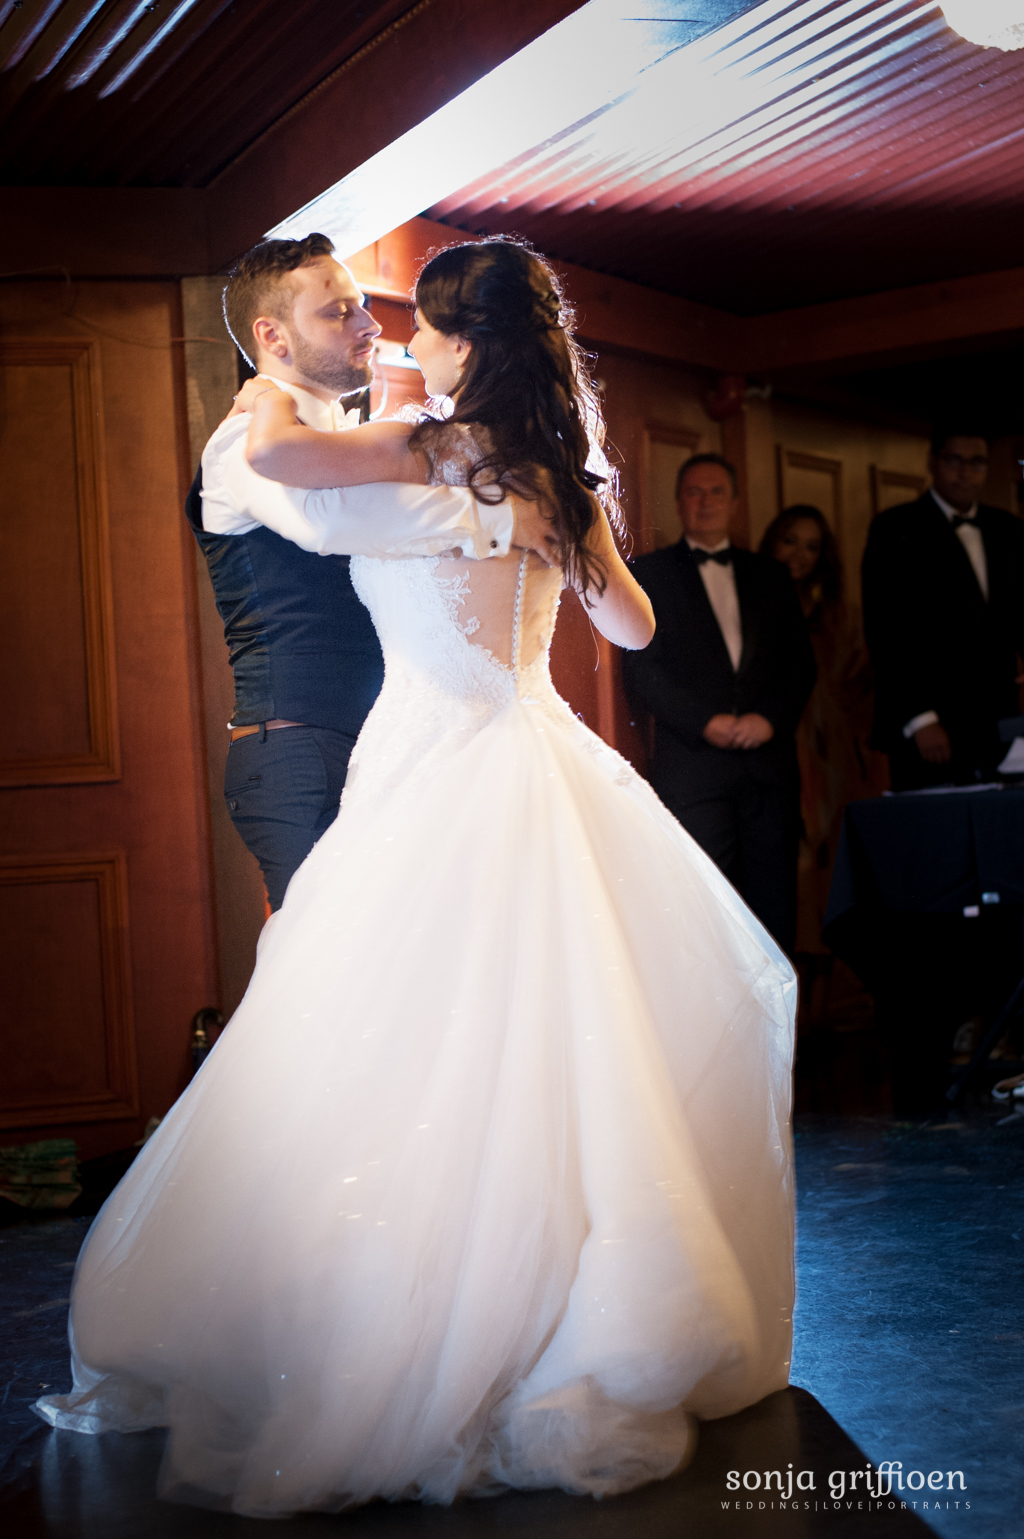 Walther-Wedding-First-Dance-Brisbane-Wedding-Photographer-Sonja-Griffioen-3.jpg